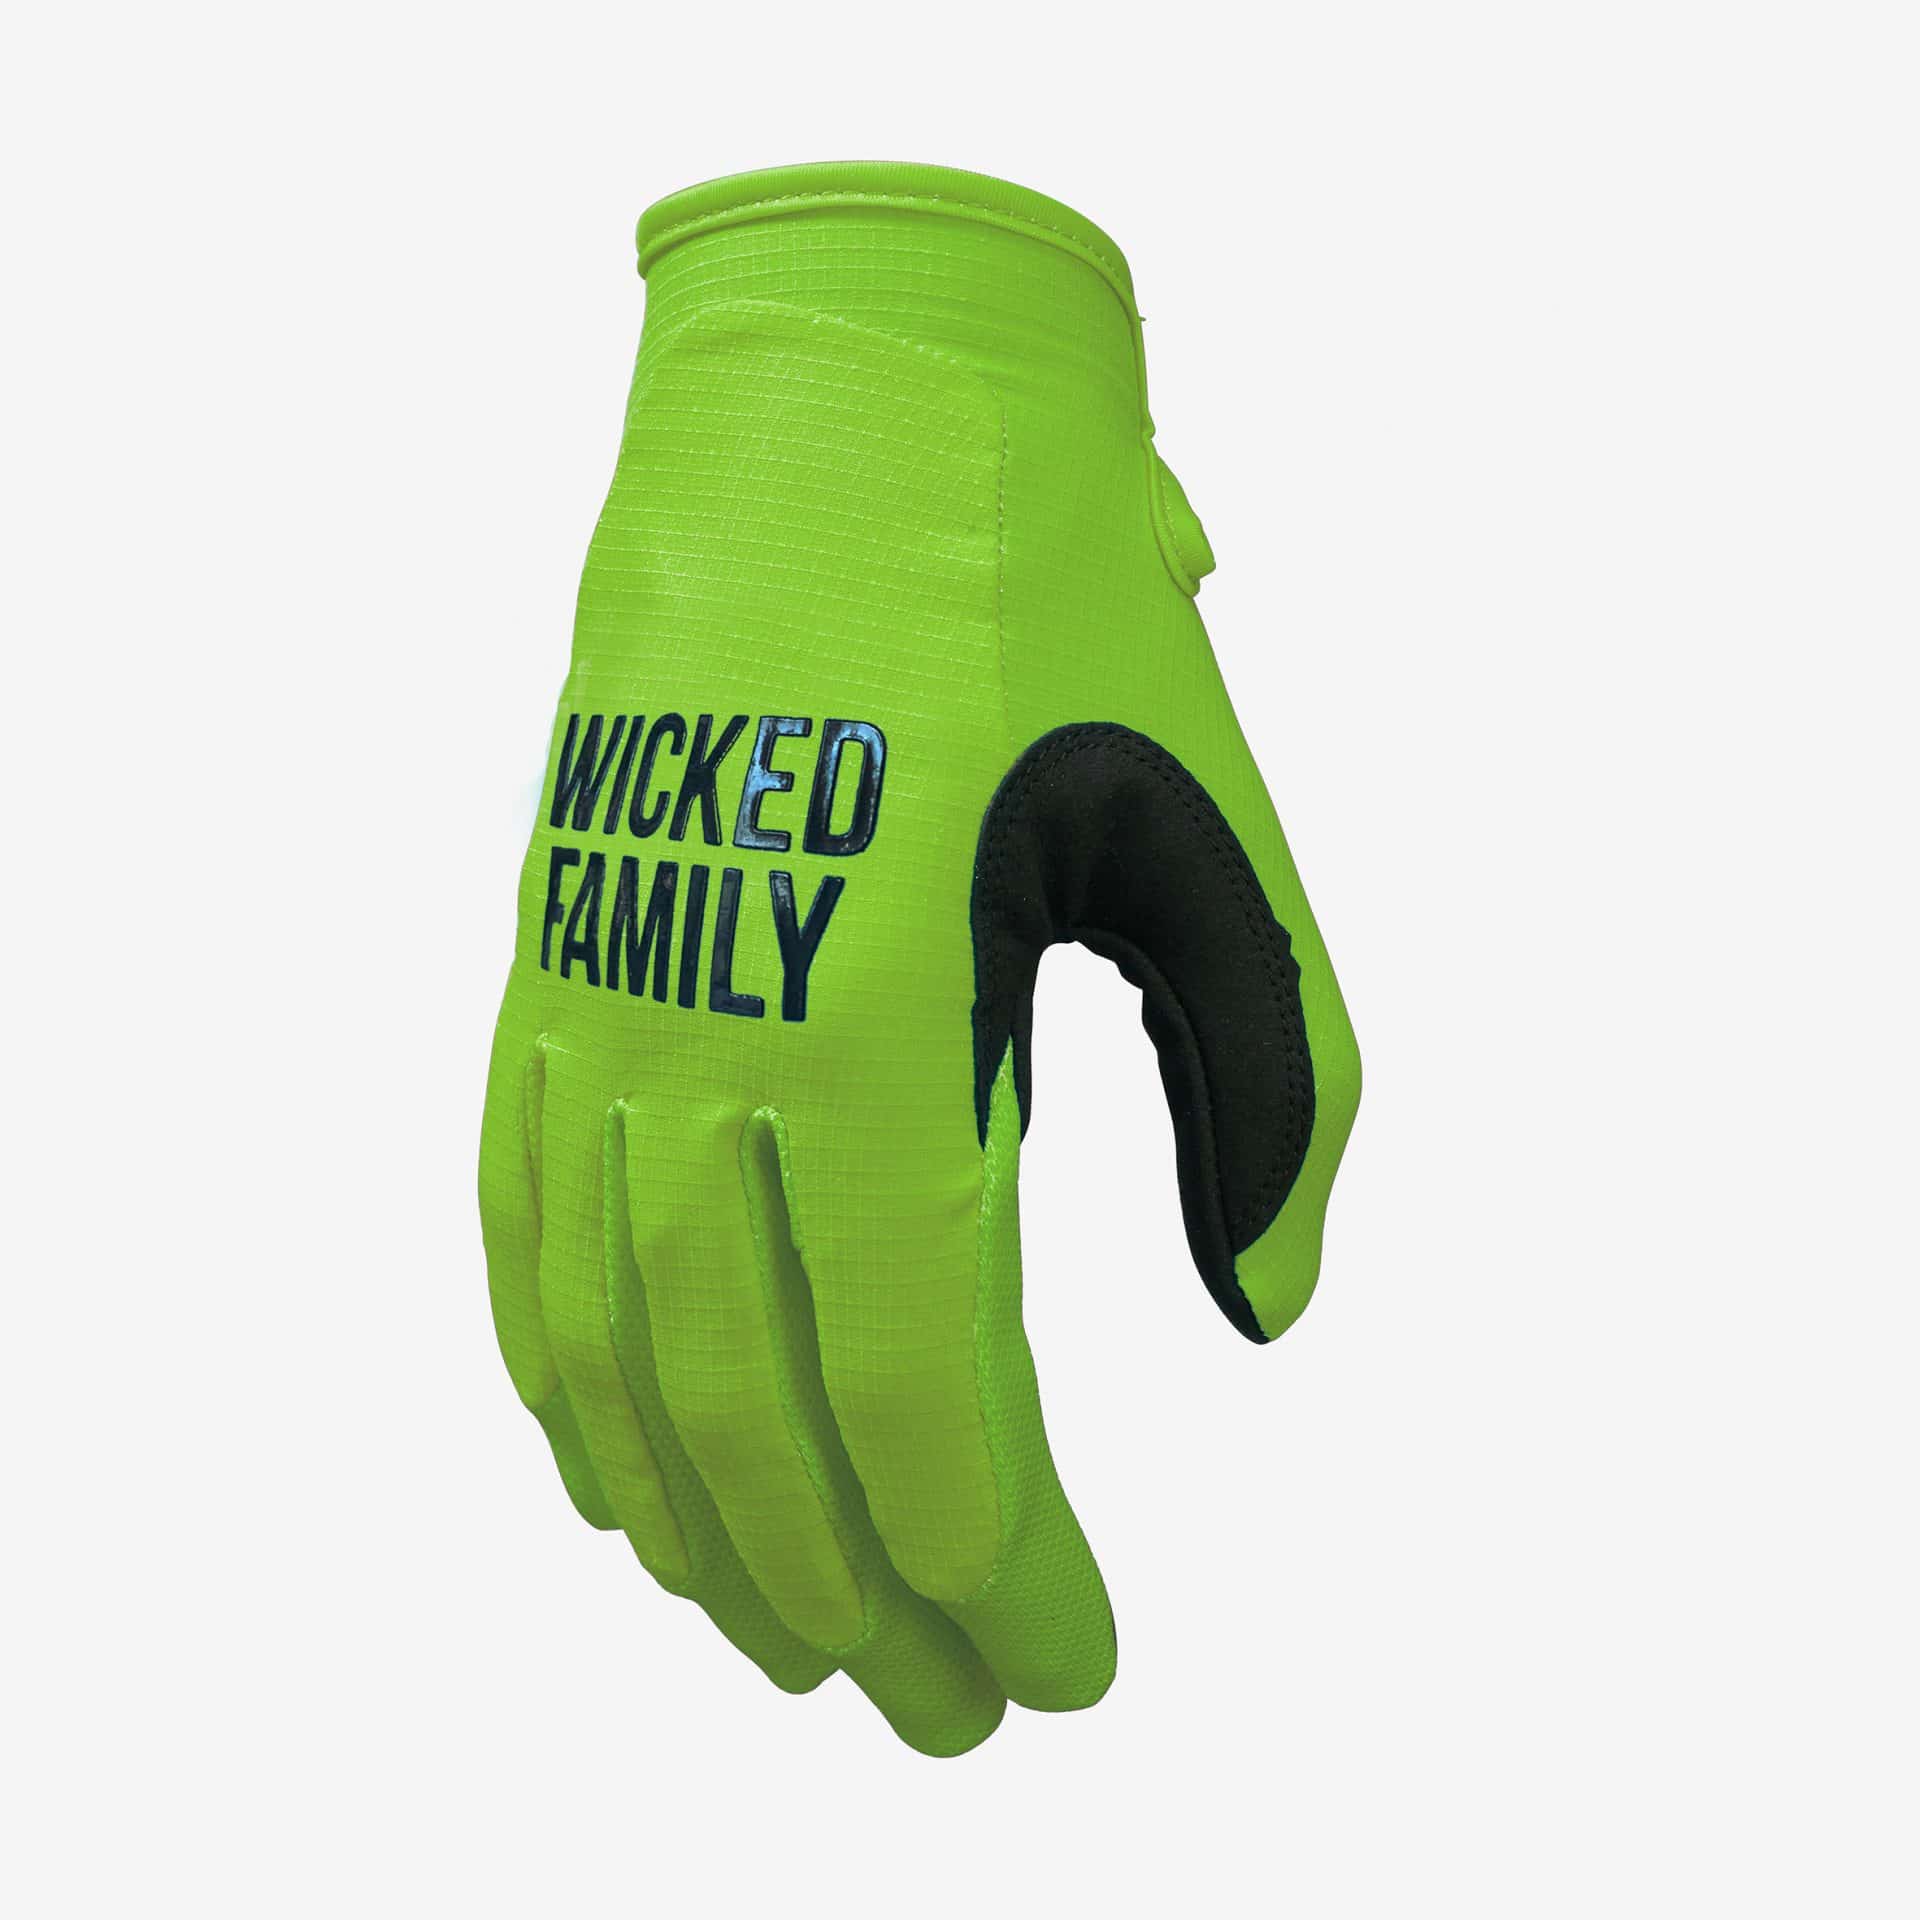 Wicked youth mx glove